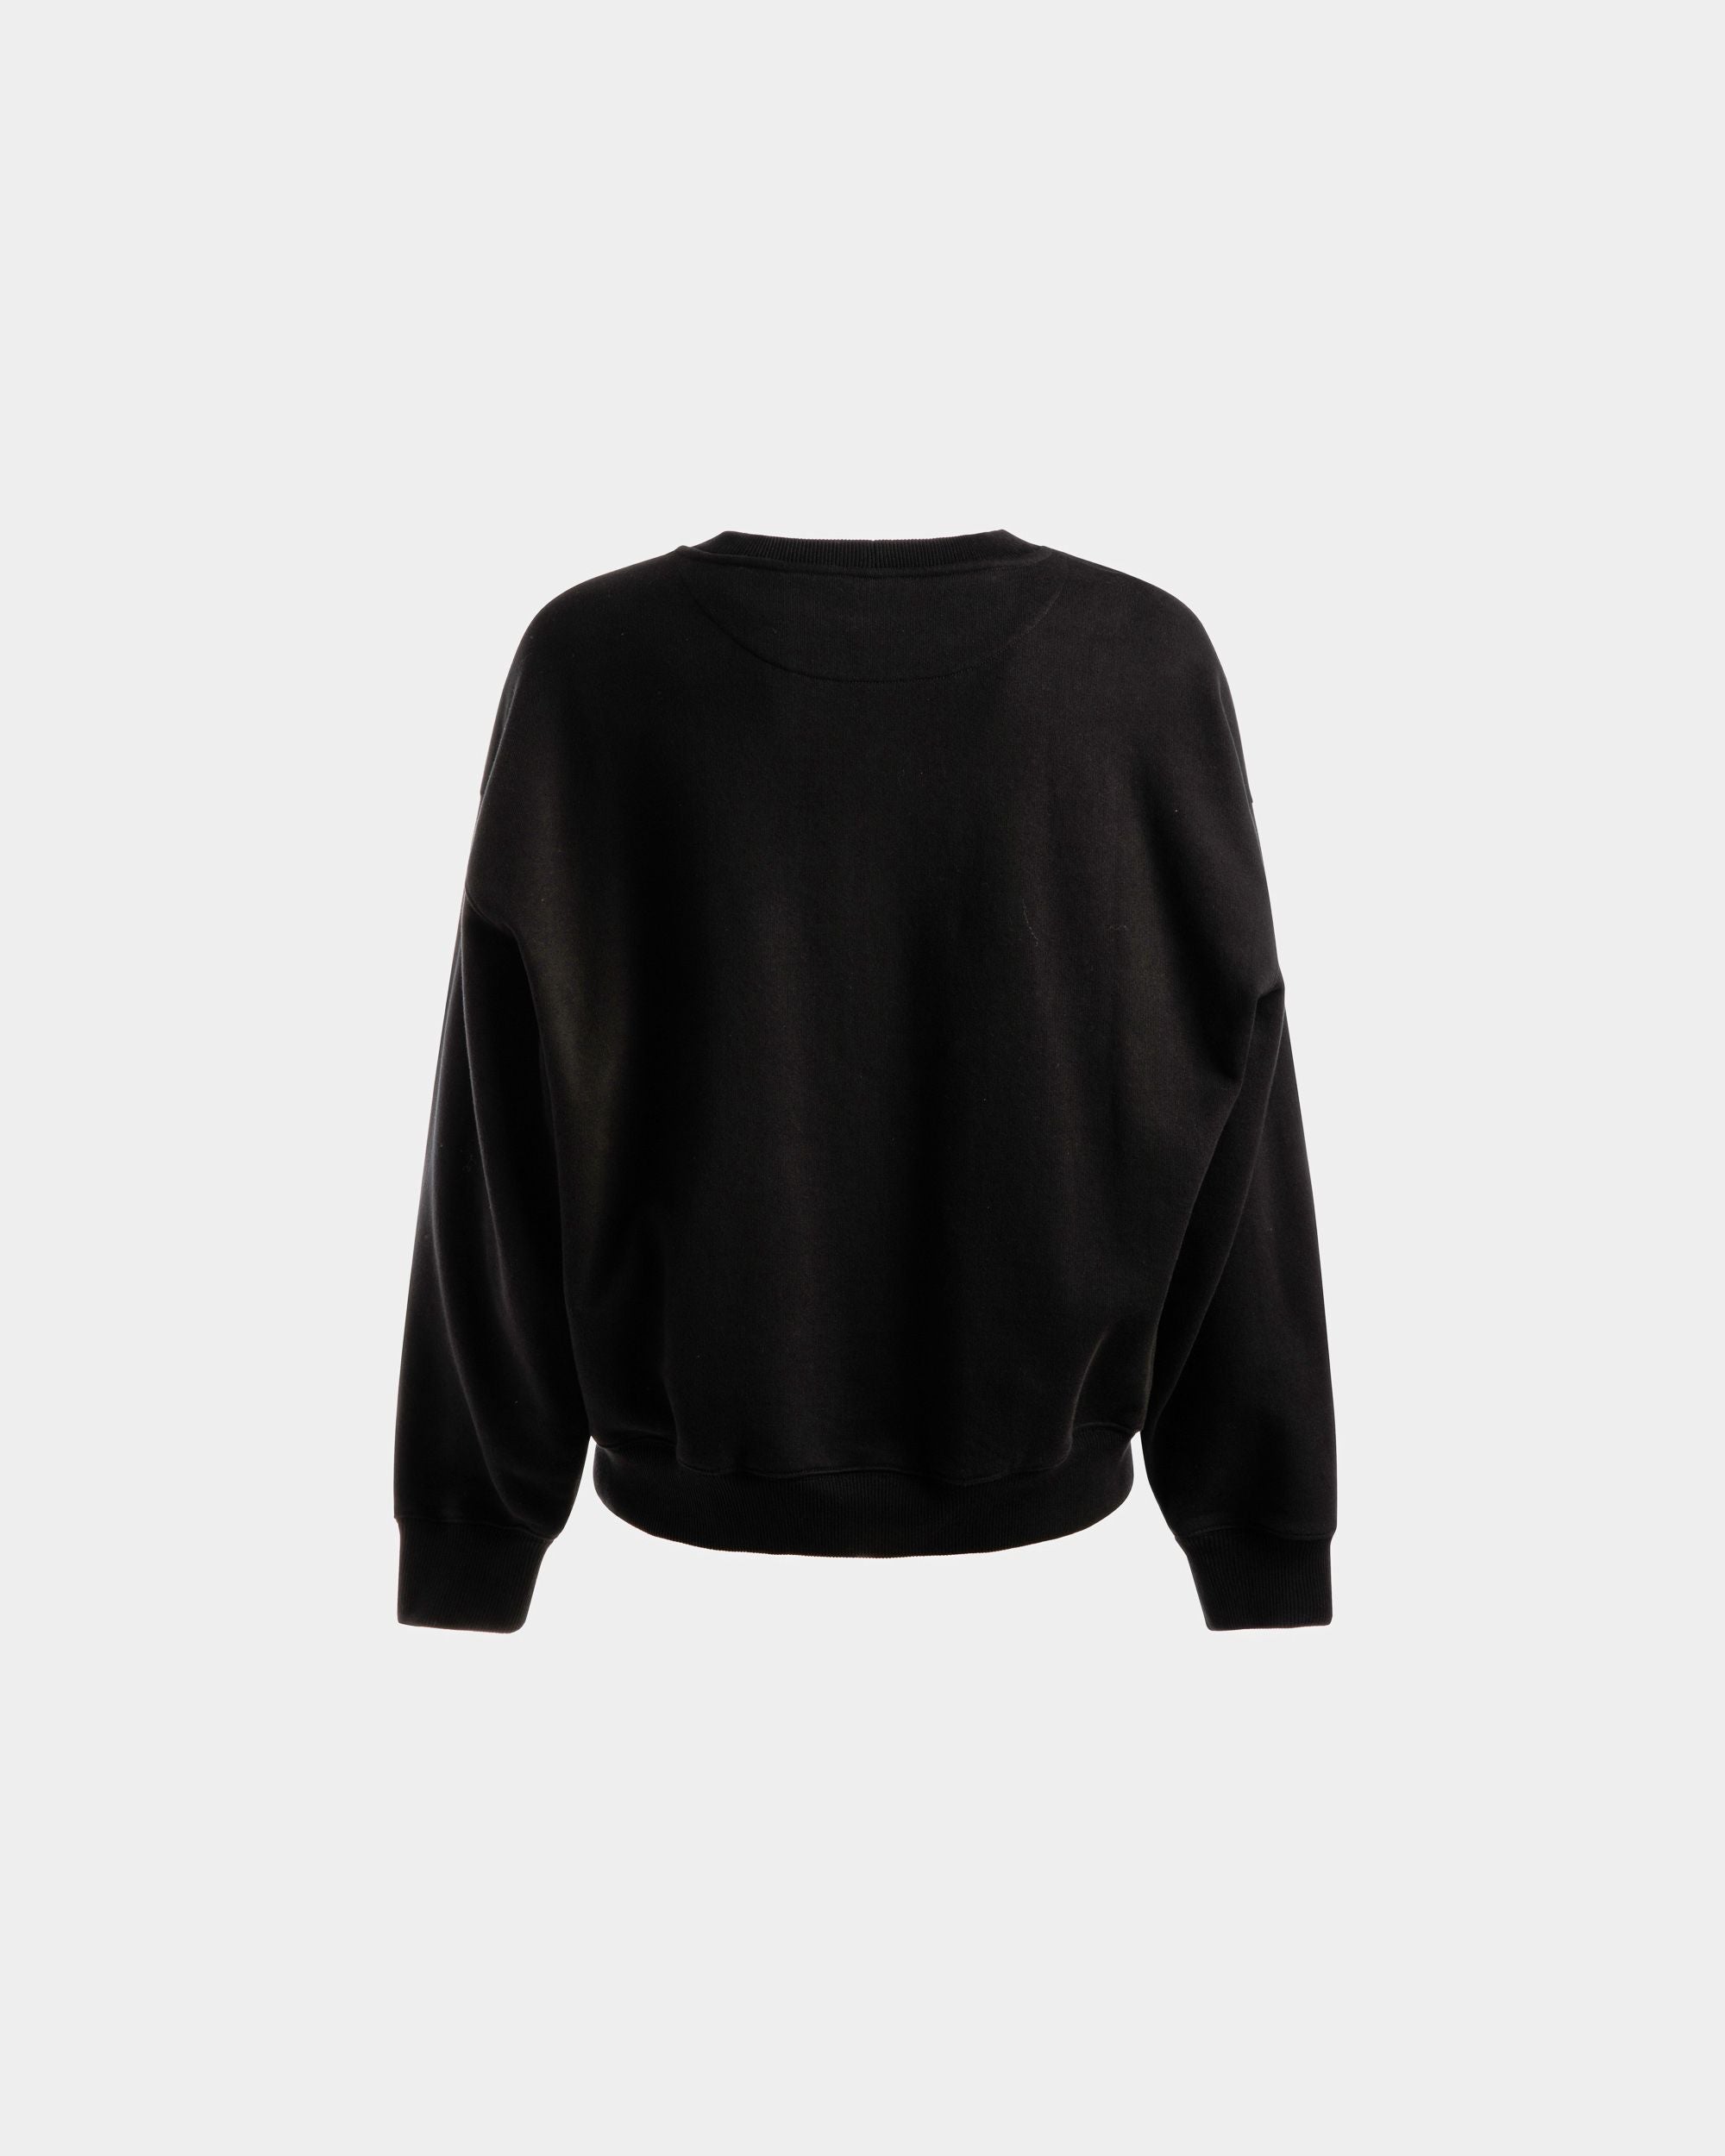 Logo Sweatshirt | Men's Sweatshirt | Black Cotton | Bally | Still Life Back